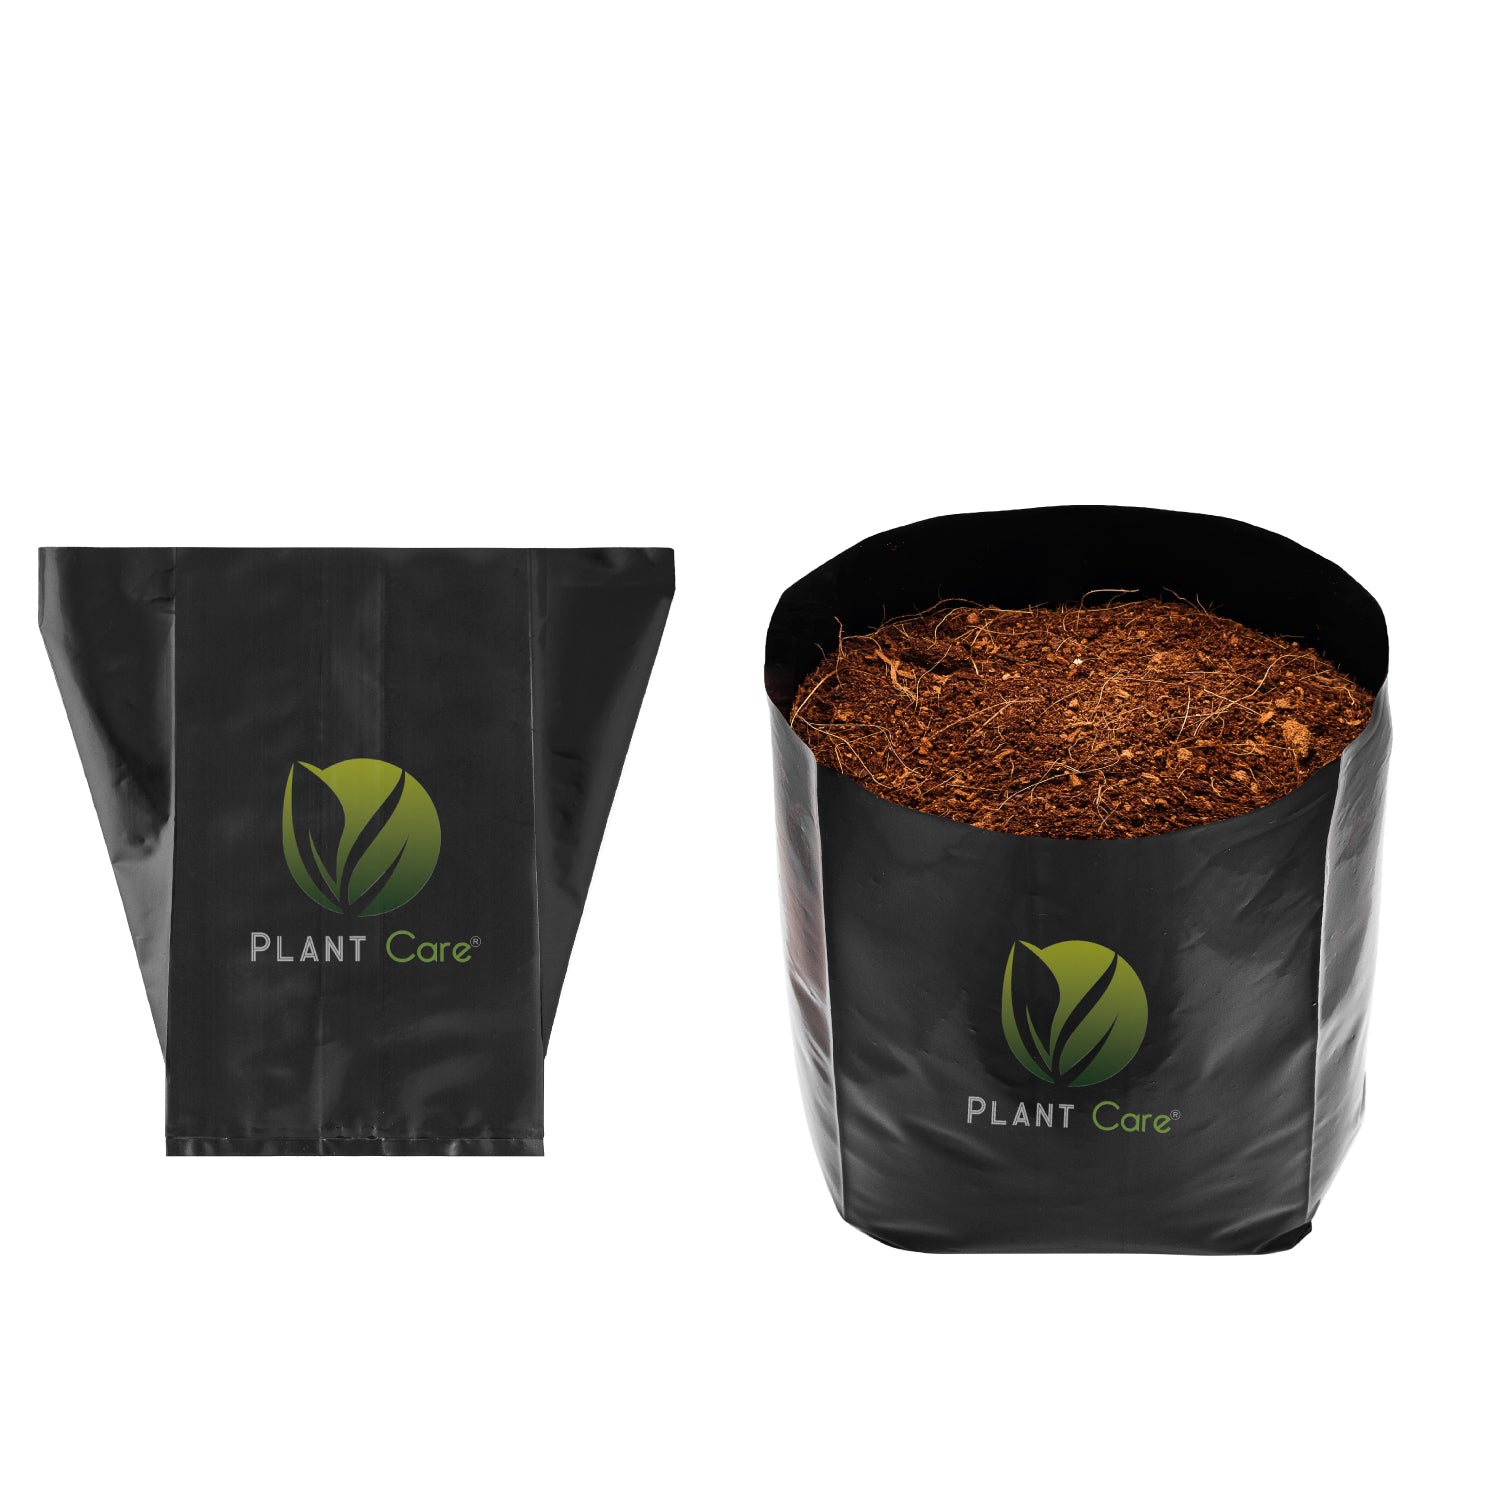 Durable 14x14 inch Nursery Bag for Plant Growth